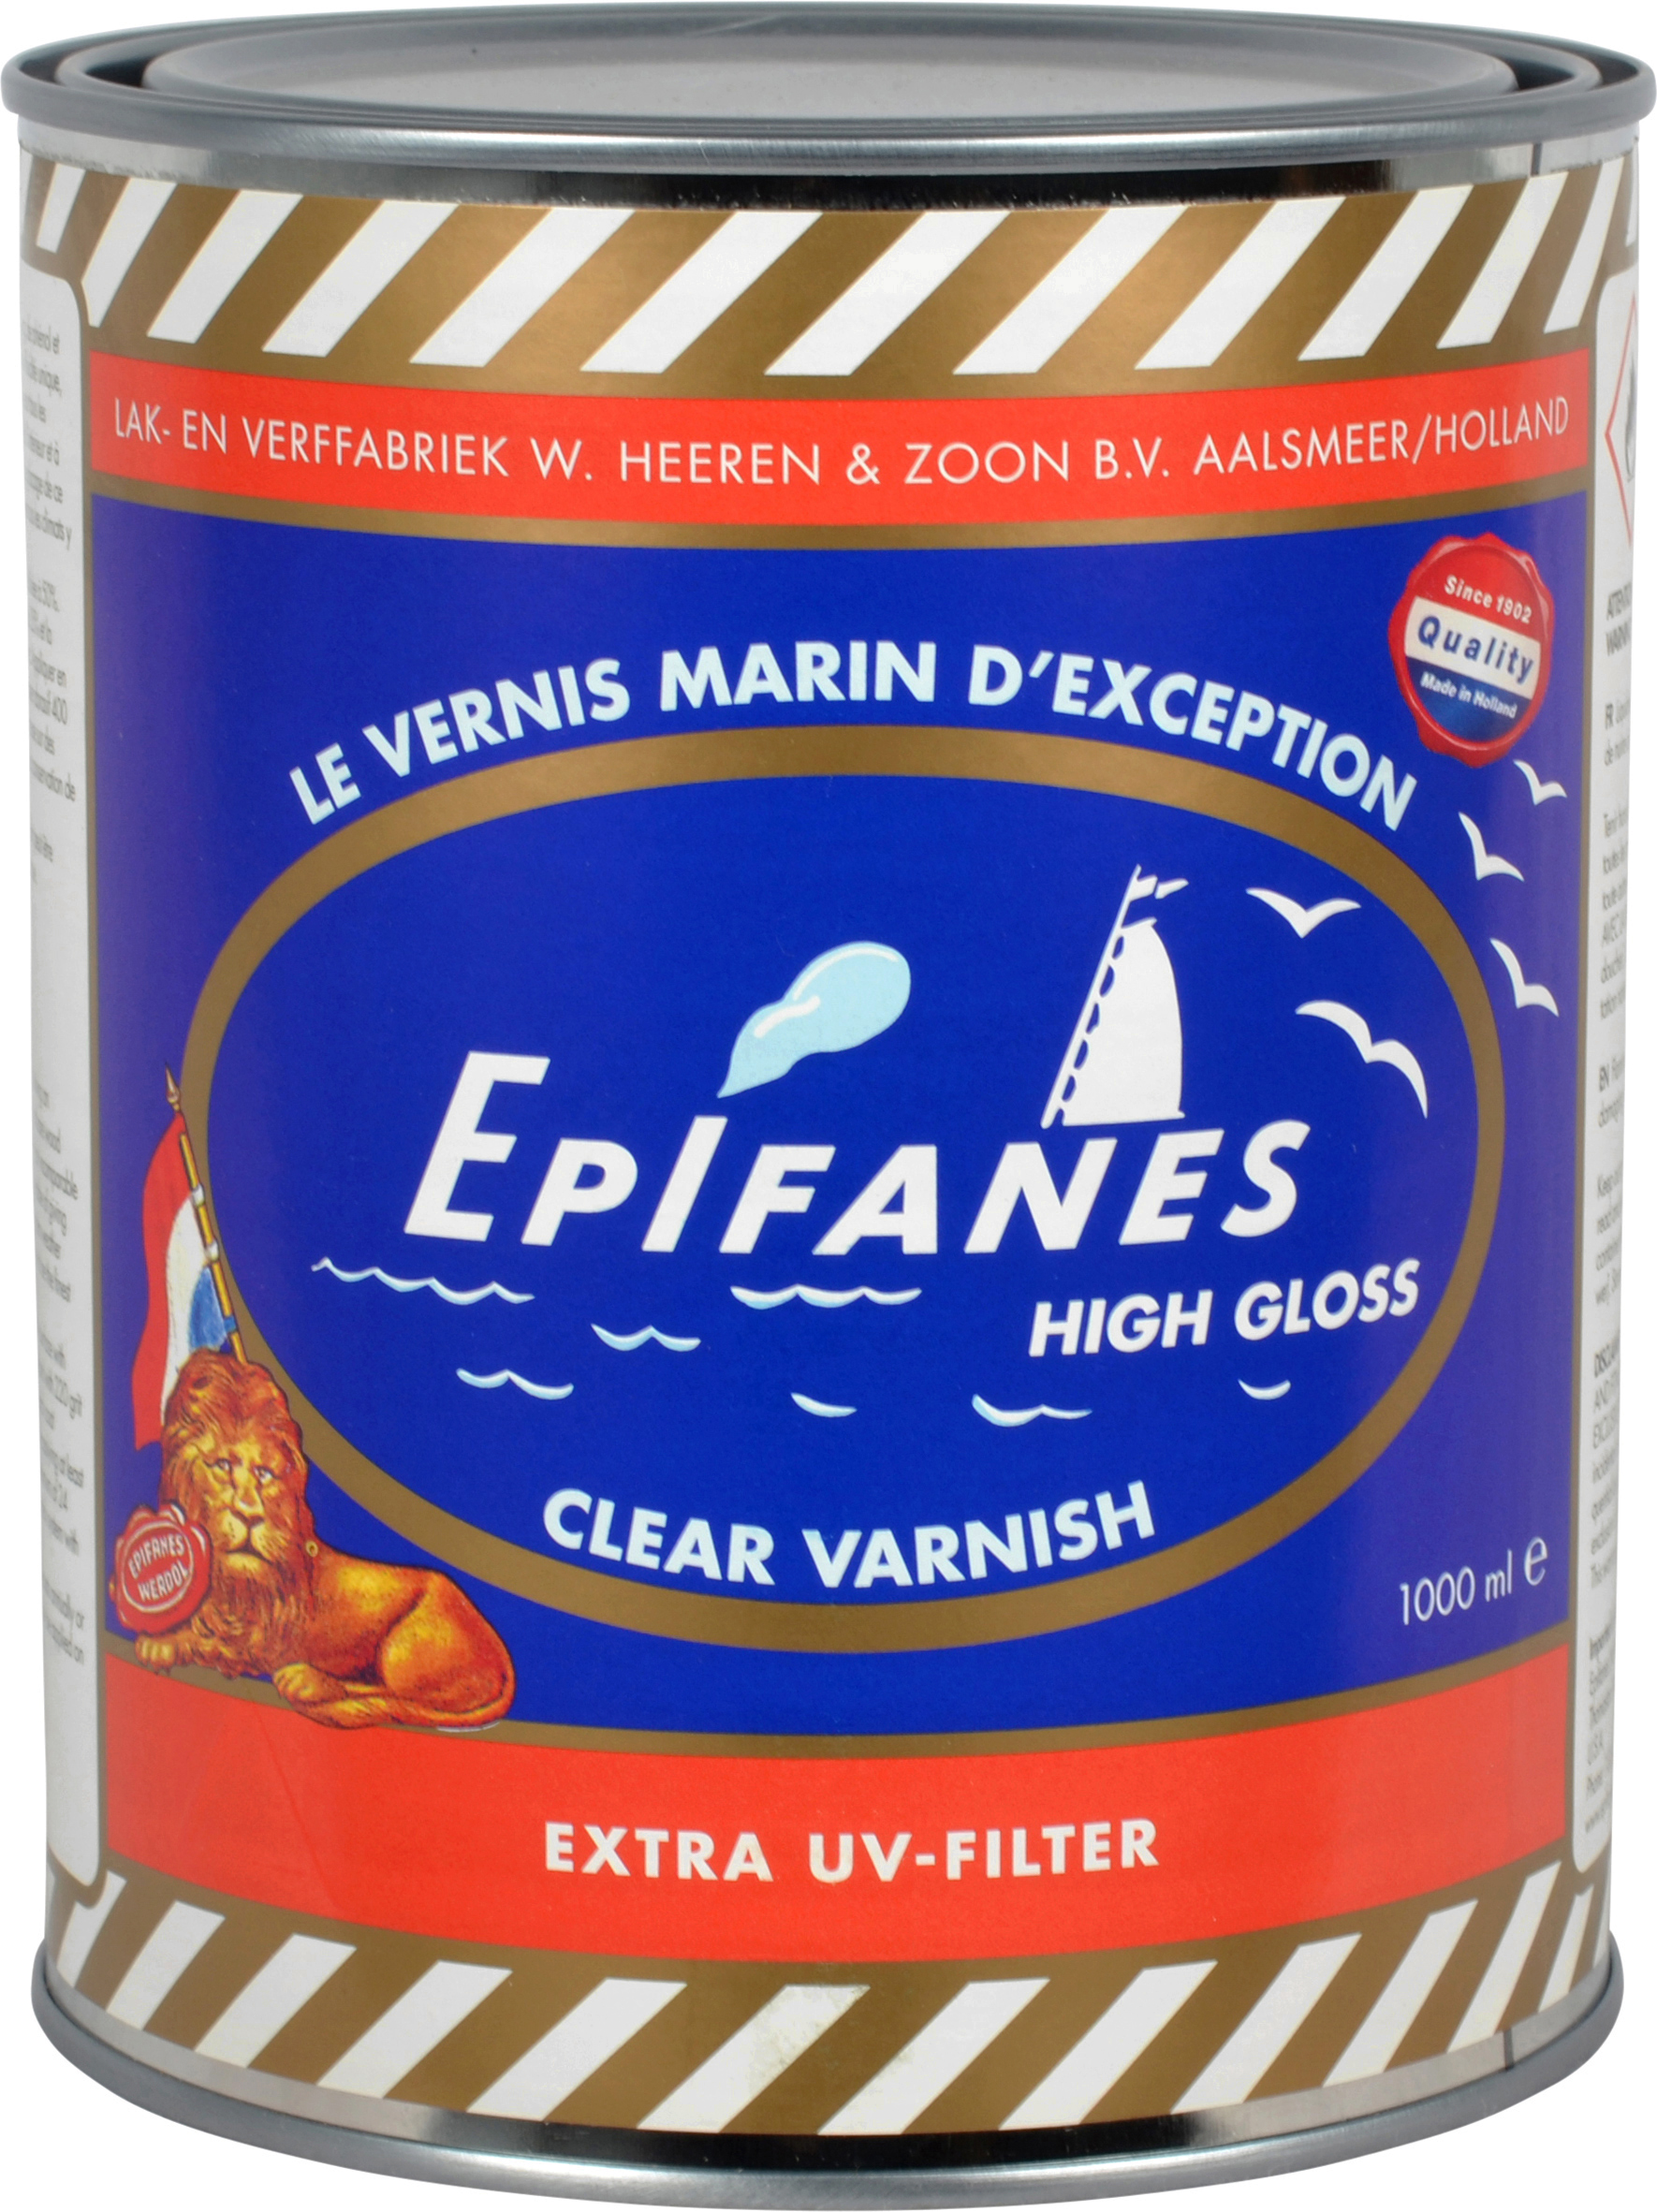 Vernis marin Epifanes